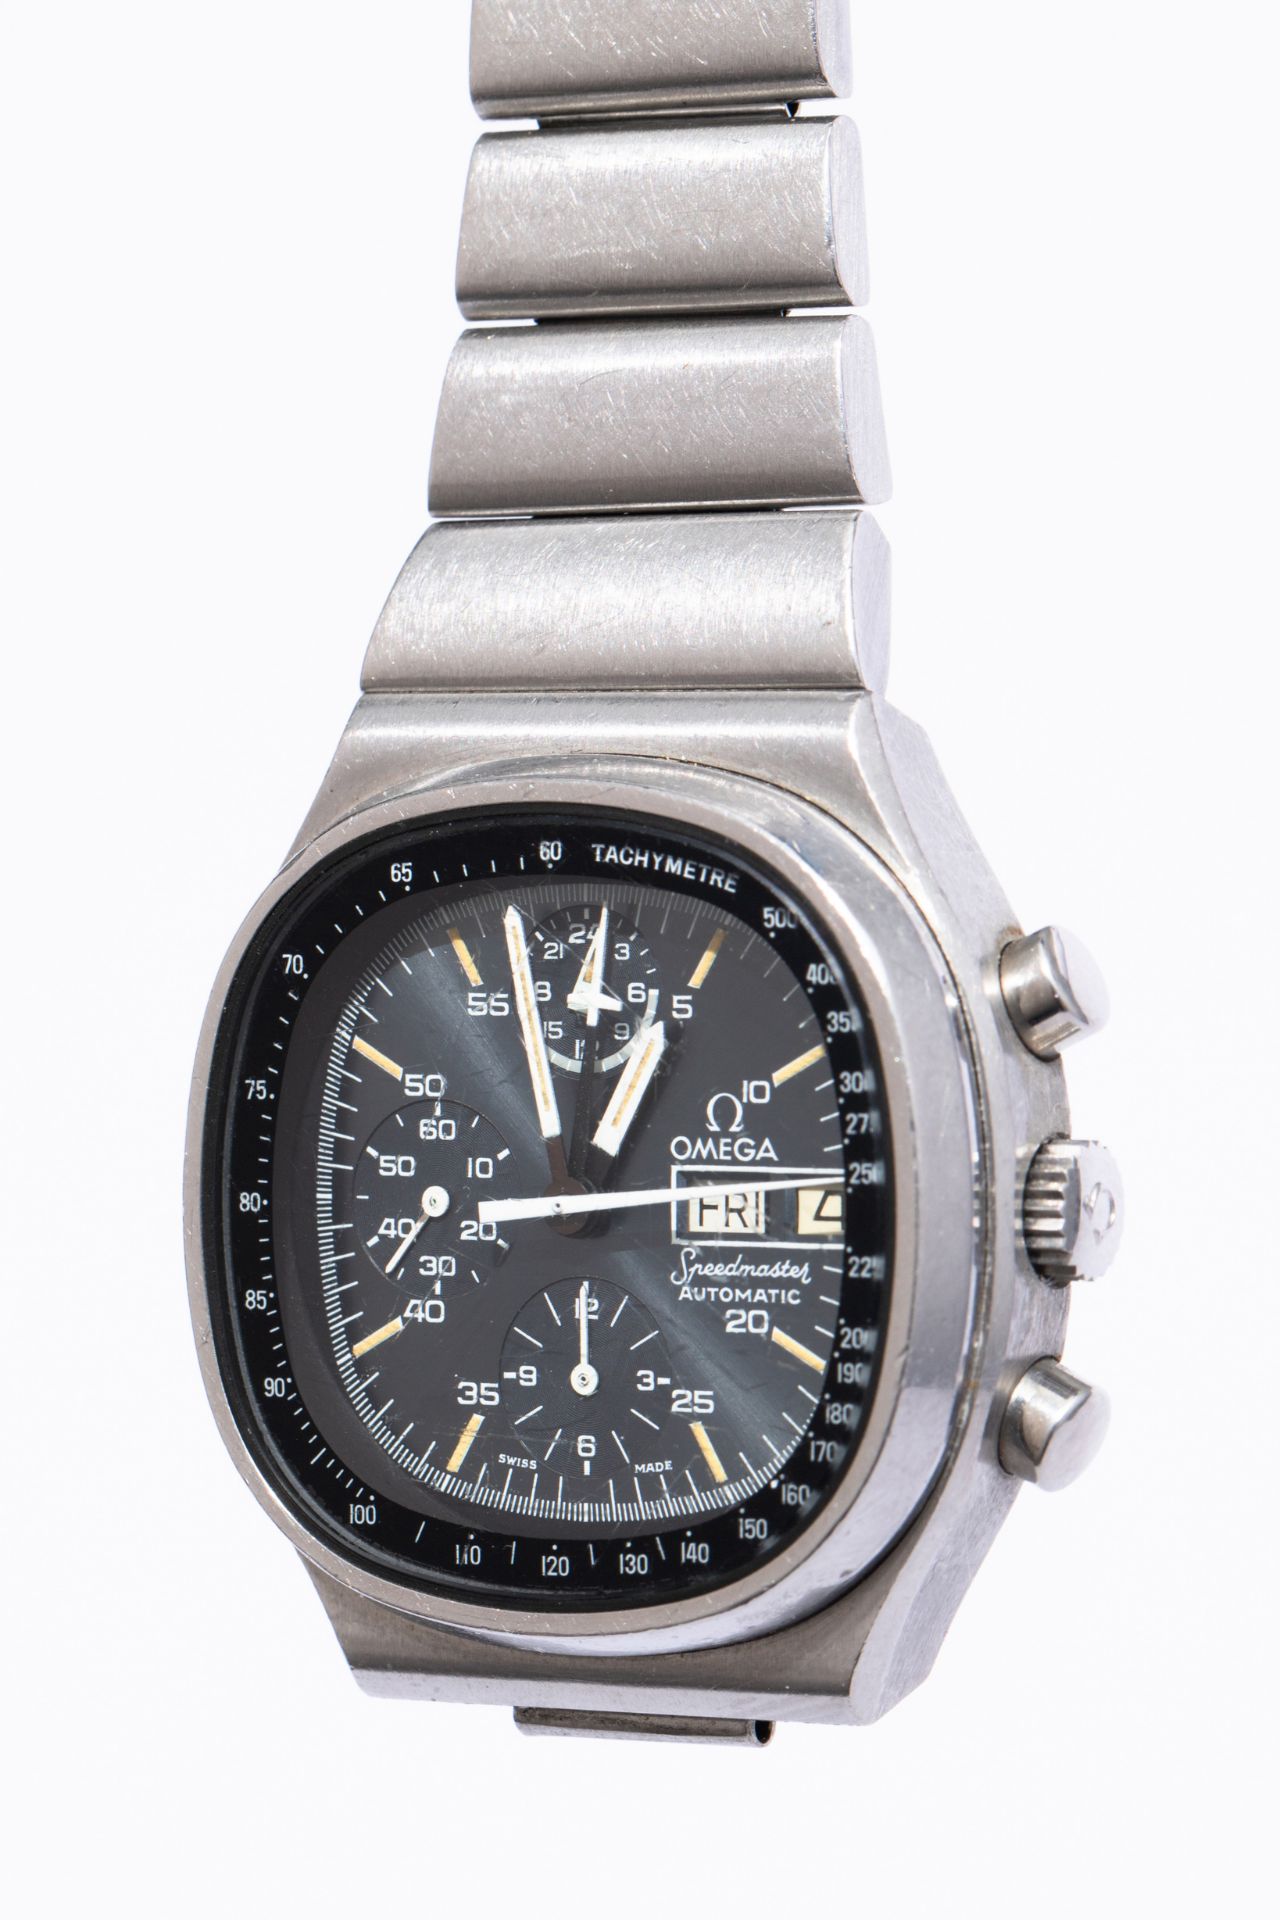 OMEGA Speedmaster Mark IV TV Chronograph wristwatch, Reference 176.0014, 1970s - Image 2 of 6